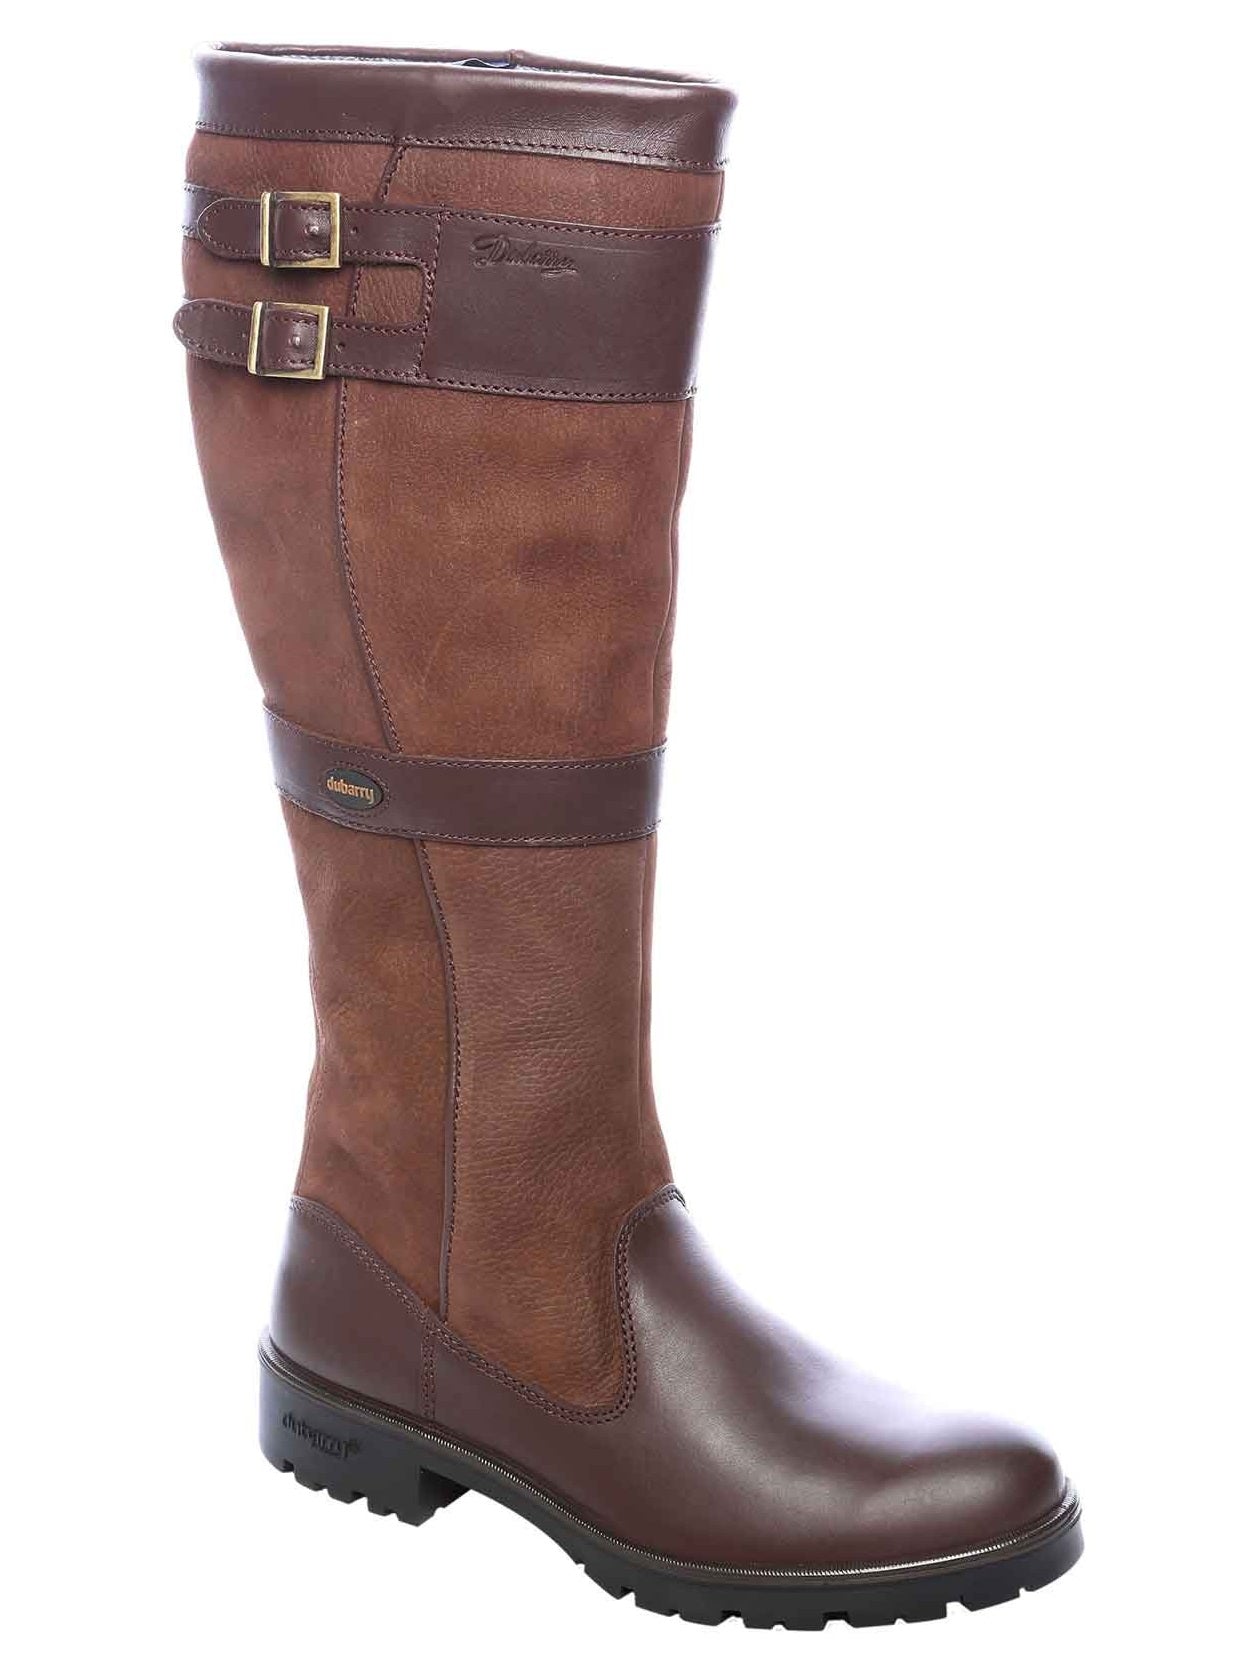 DUBARRY Longford Boots - Ladies Waterproof Gore-Tex Leather - Walnut